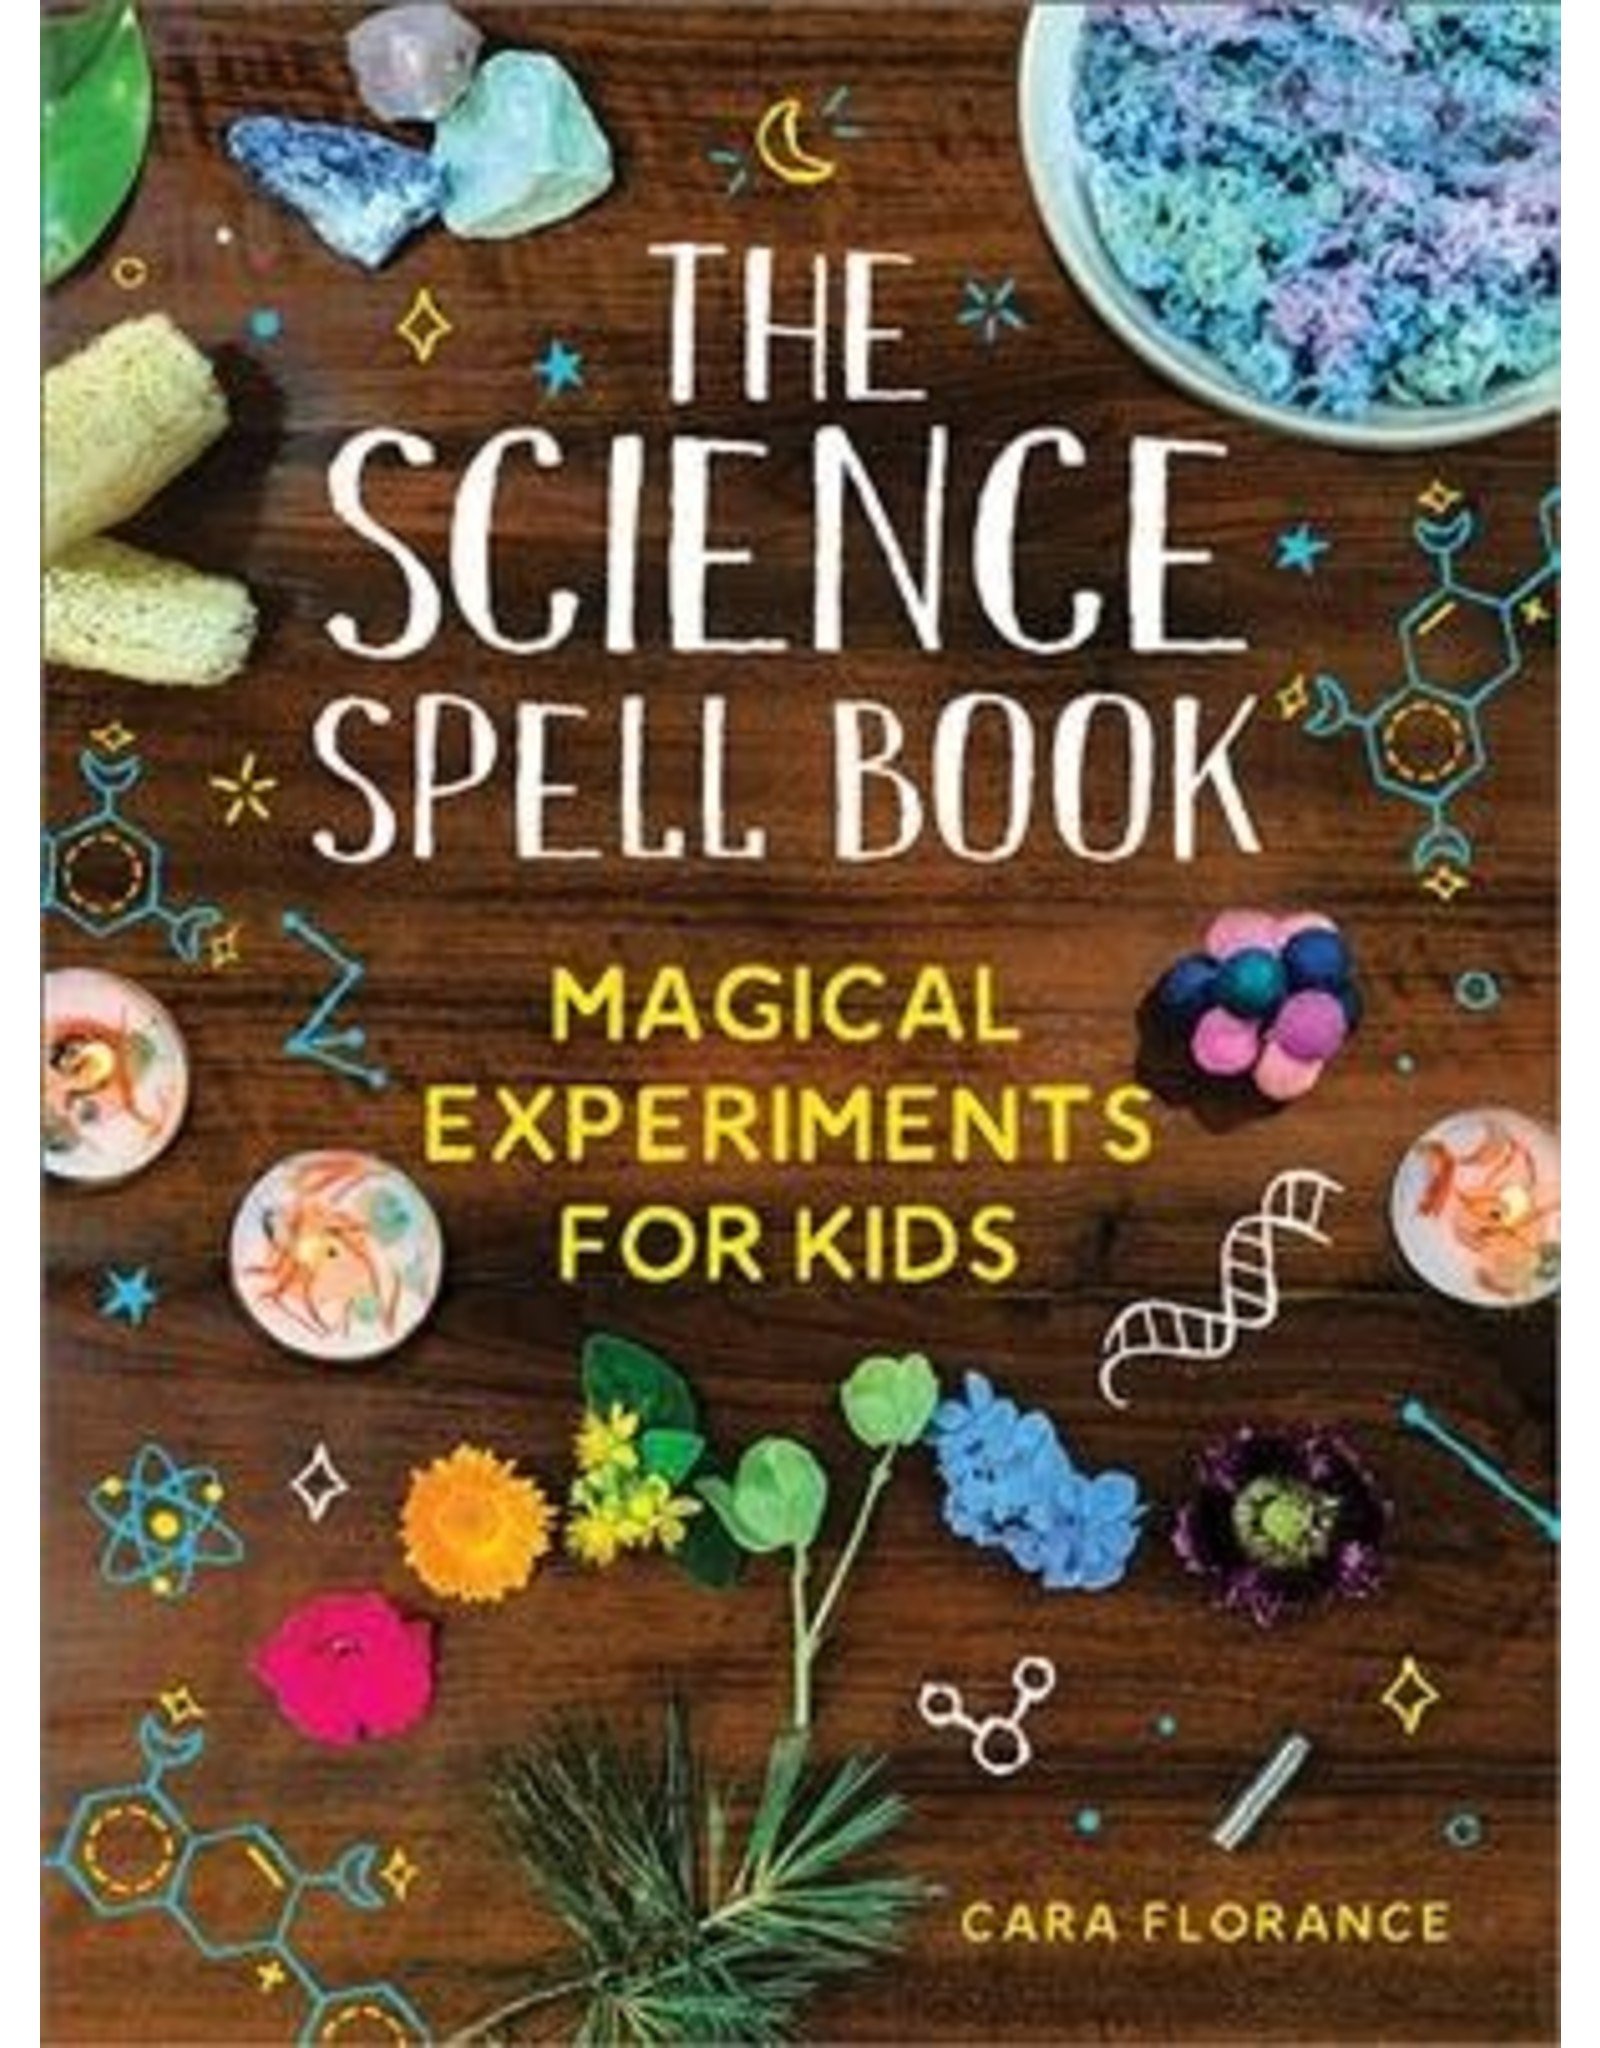 magic spell book for kids